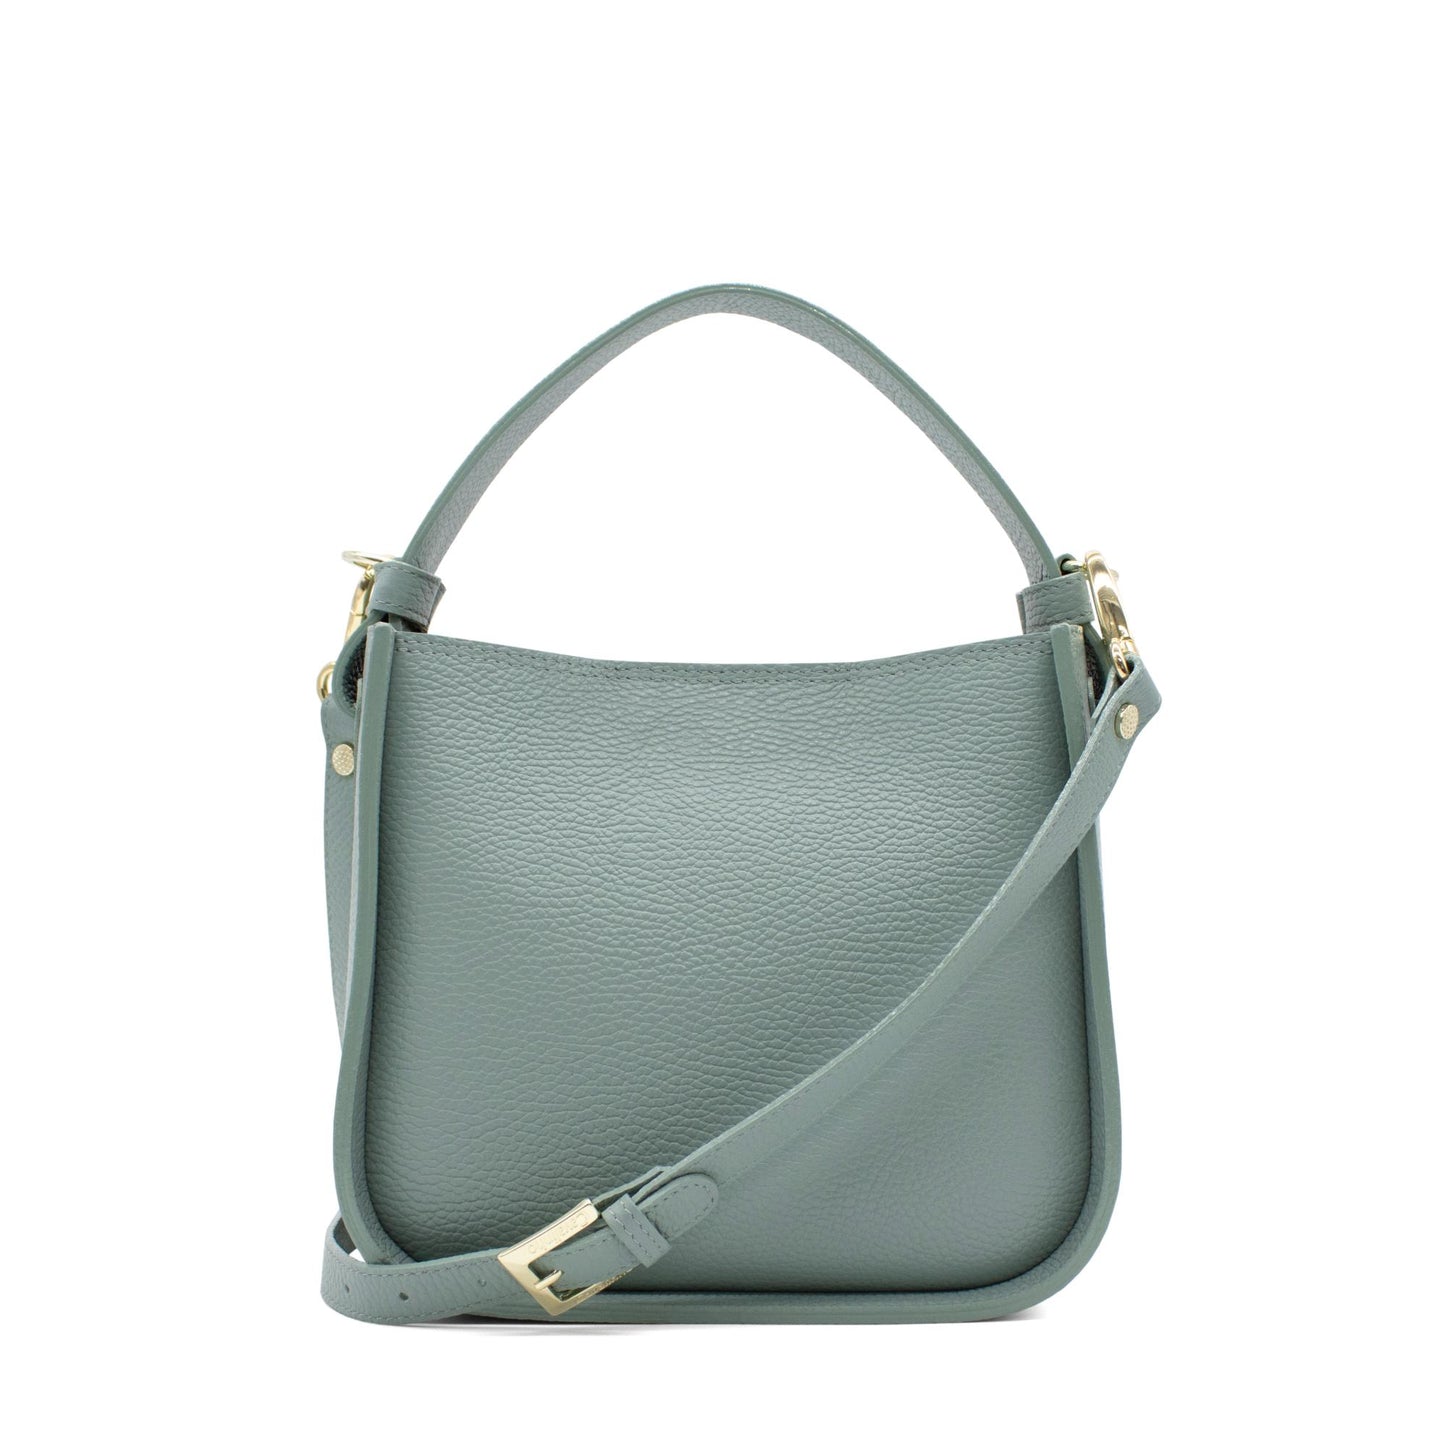 #color_ DarkSeaGreen | Cavalinho Muse Leather Handbag - DarkSeaGreen - 18300475.09_4